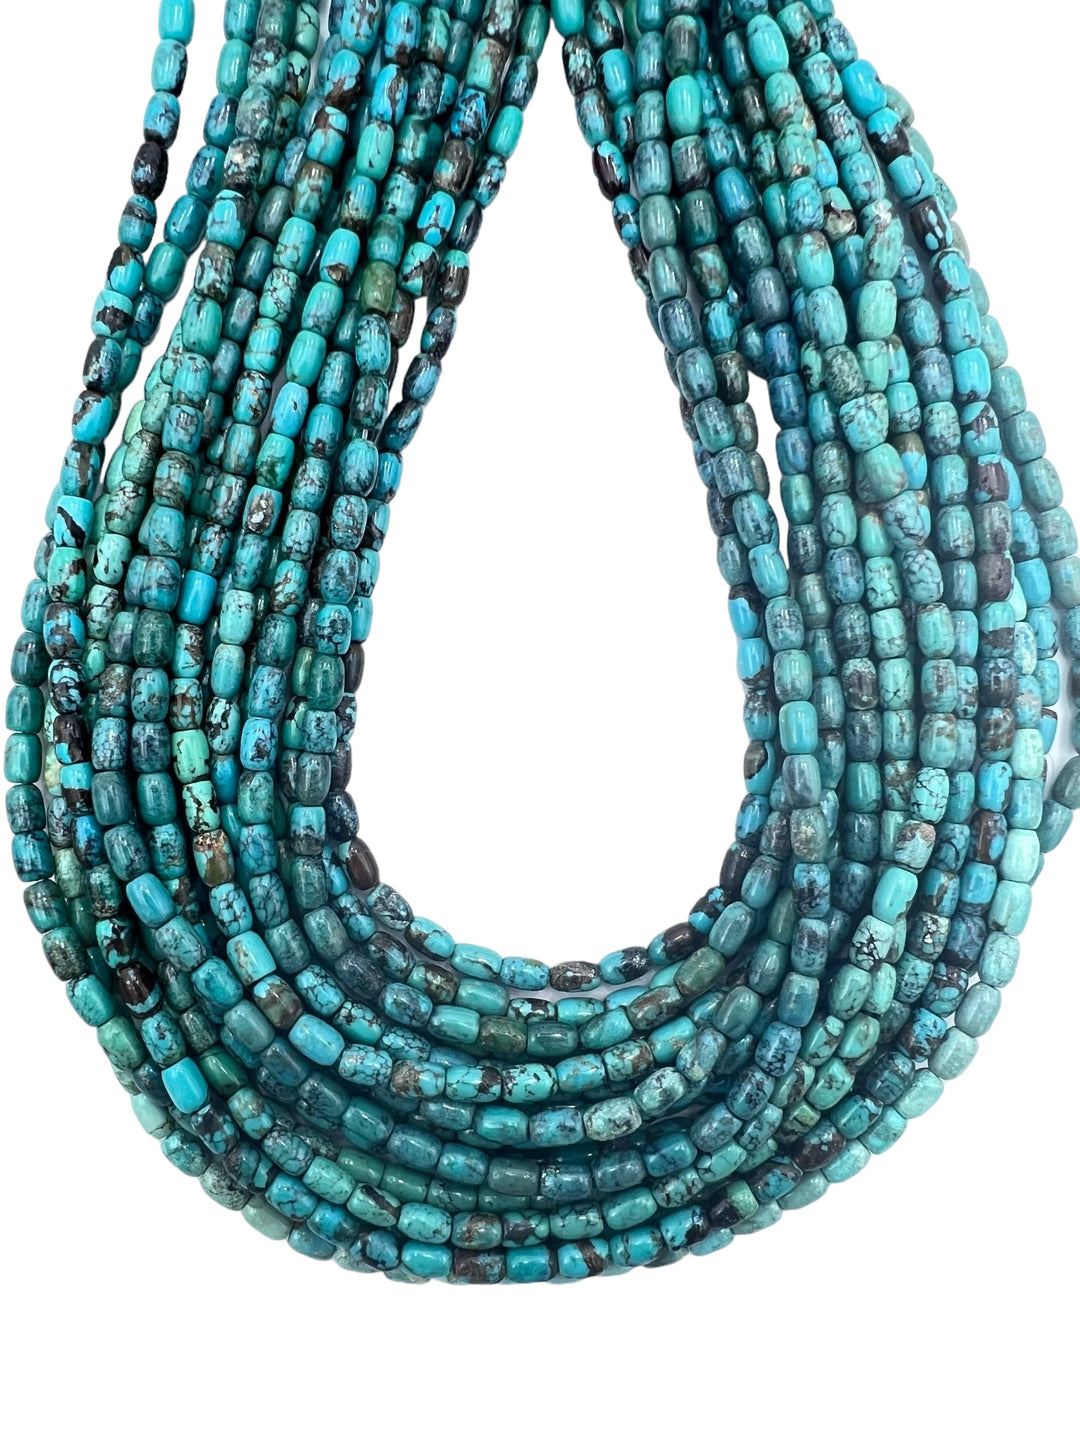 Hubei Turquoise (China) 4x6mm Barrel Beads 16 inch strand